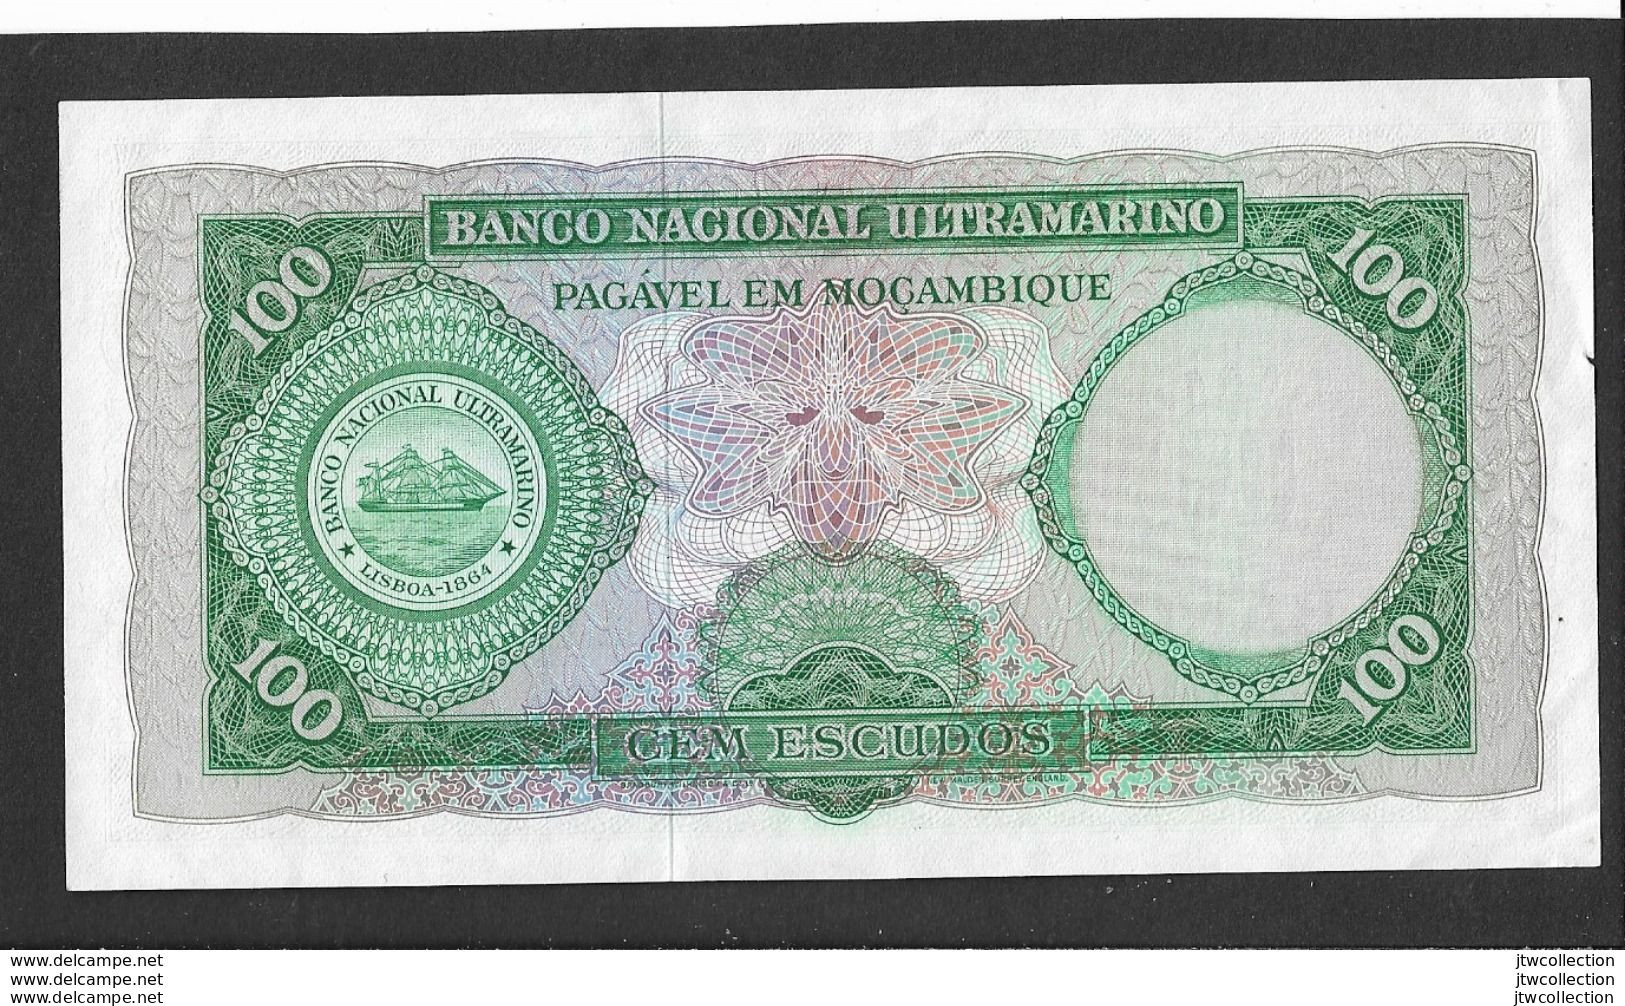 Monzambico - Mozambique